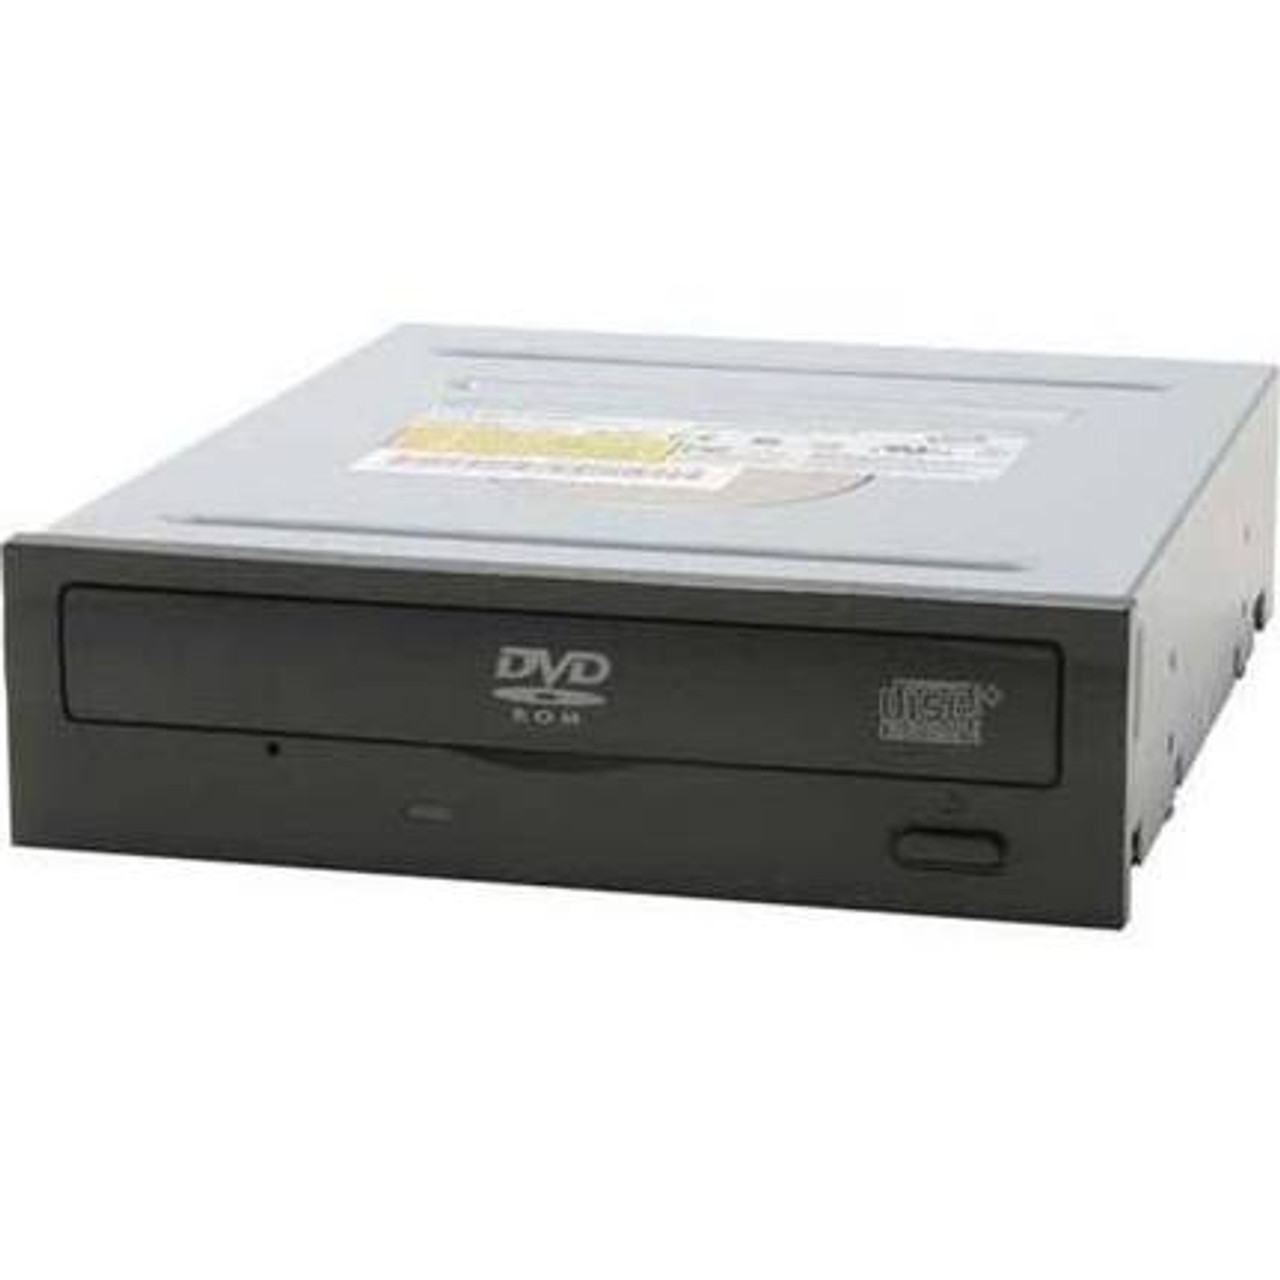 71P7357 - IBM Internal DVD-Reader -  Pack - Black - DVD-ROM Support - 16x Read/ - IDE - 5.25